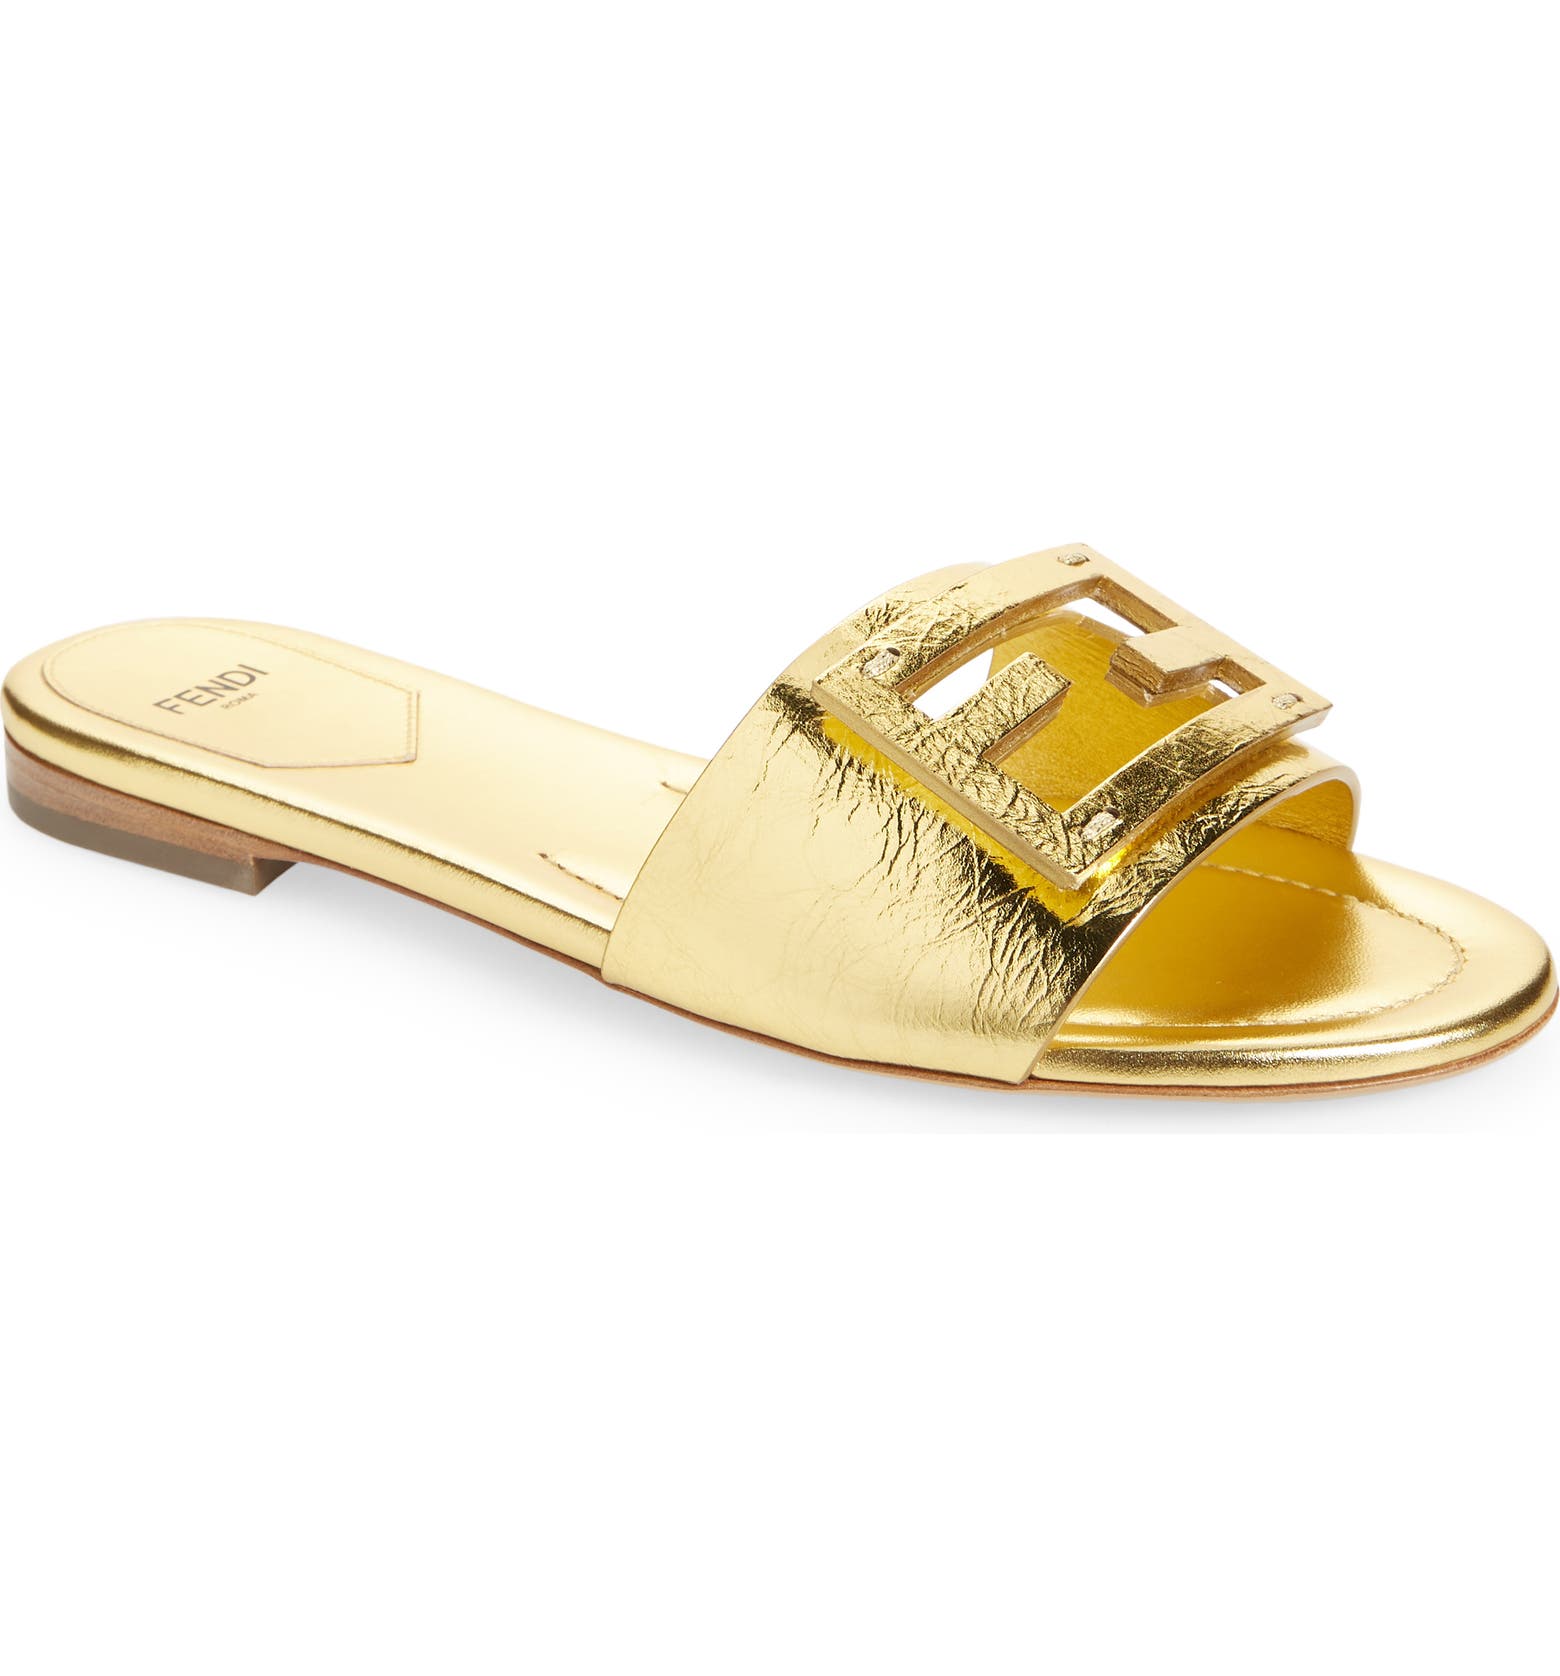 Gold Fendi Baguette flat sandals